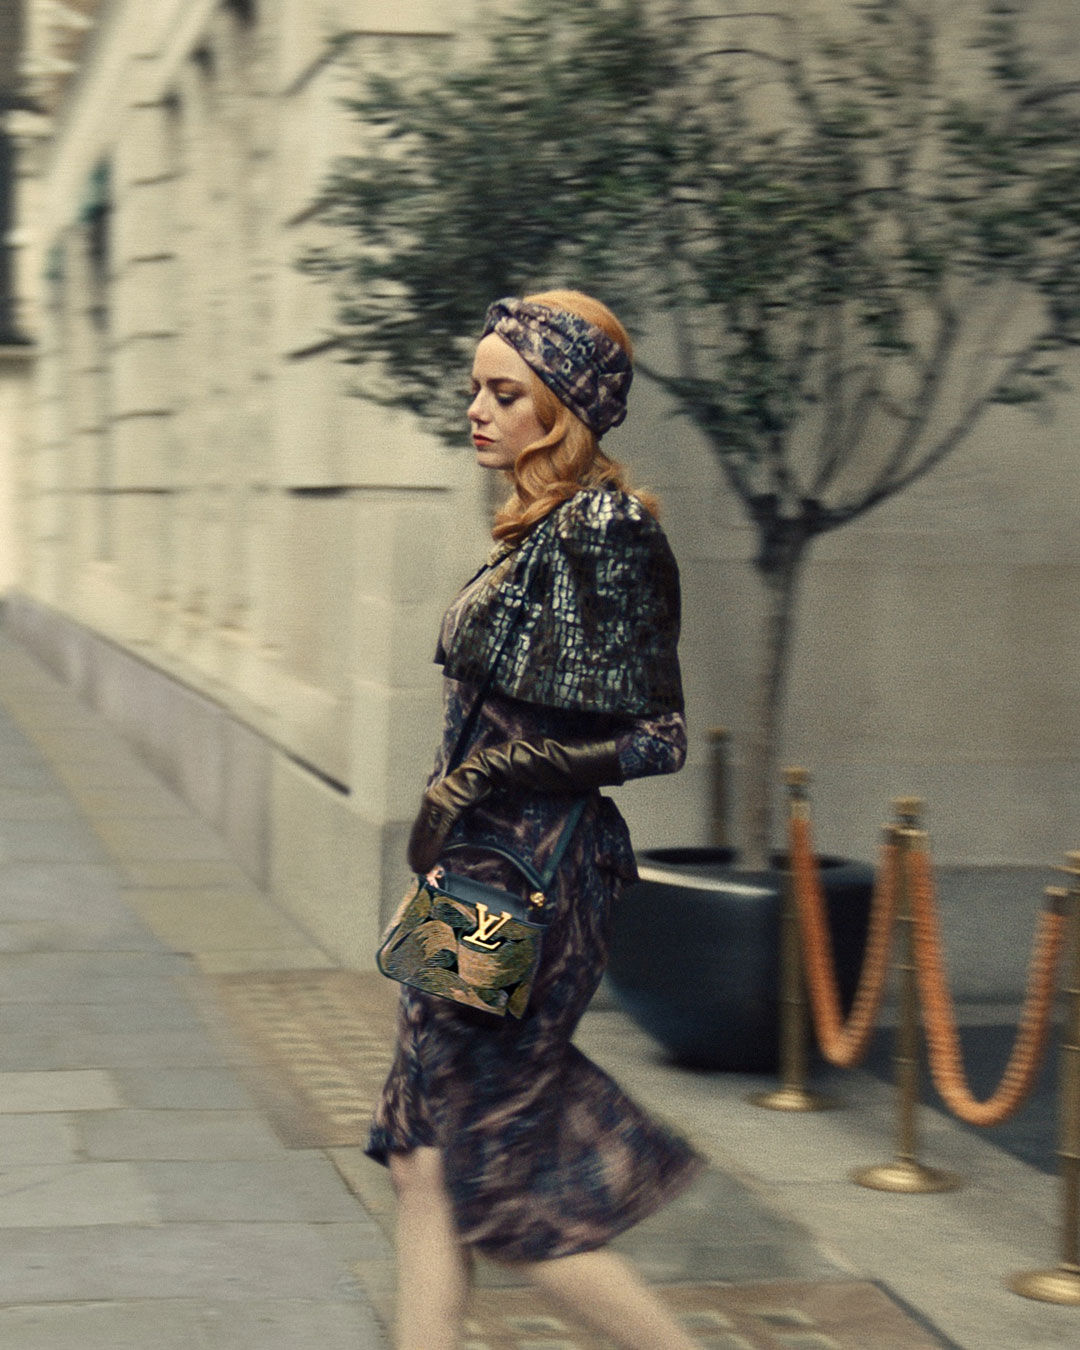 A closer look at Louis Vuitton's Capucines handbag on Disney's